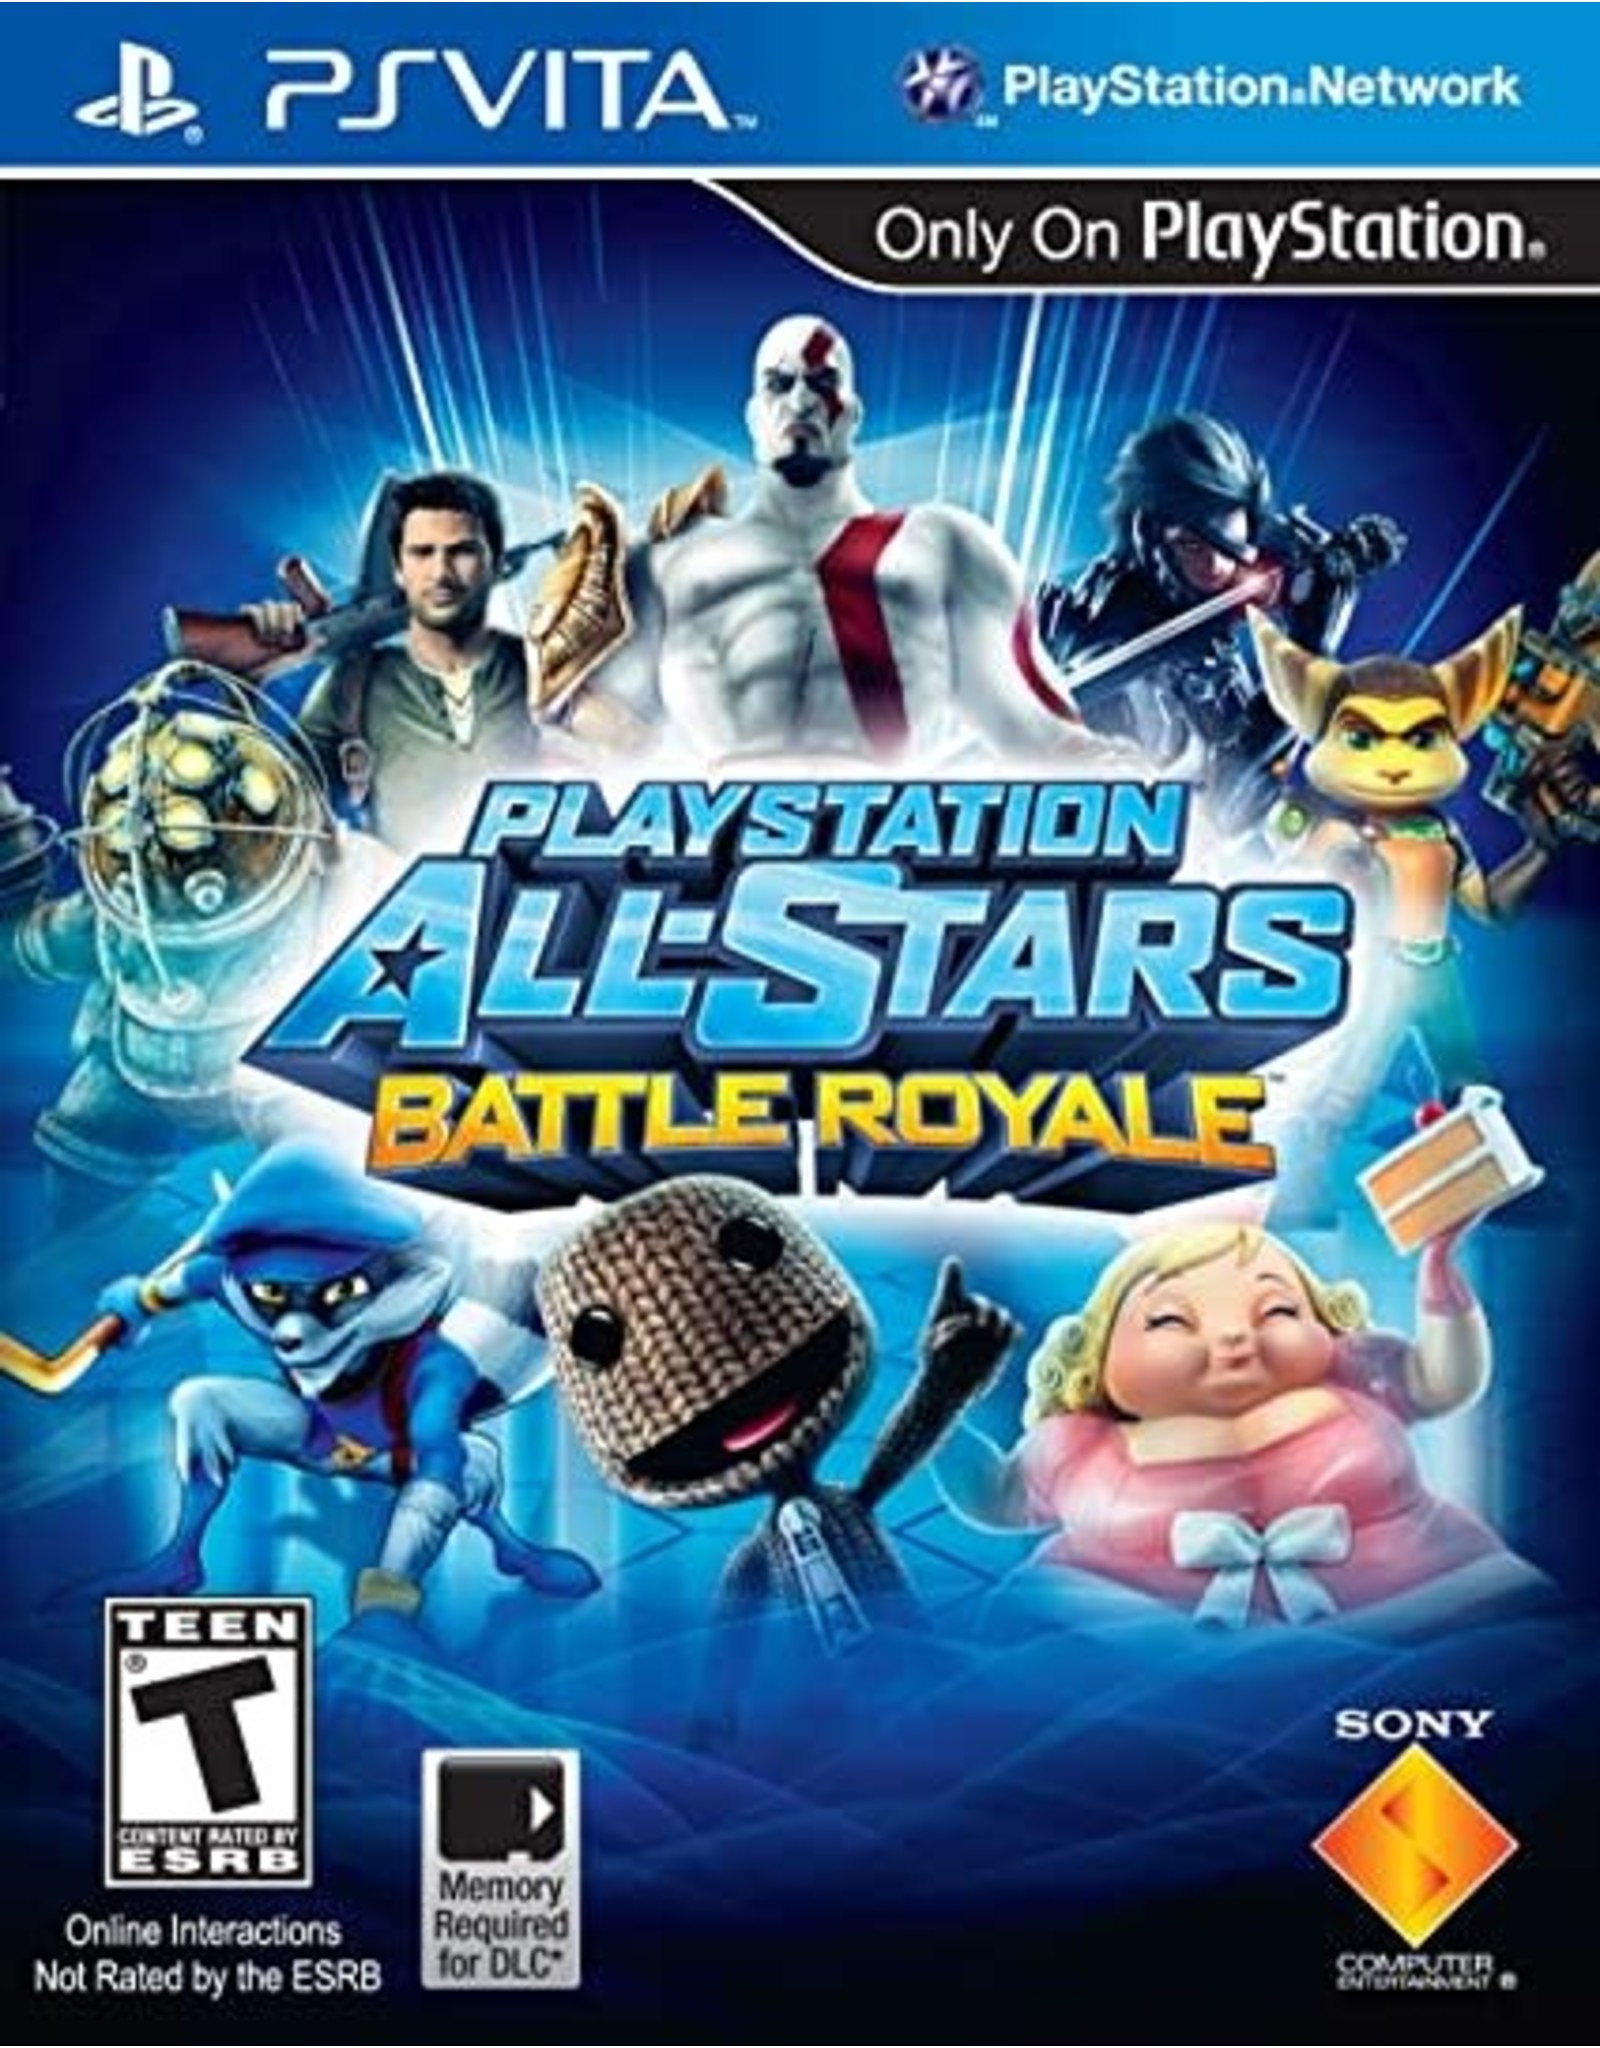 Playstation Vita Playstation All-Star Battle Royale (CiB)